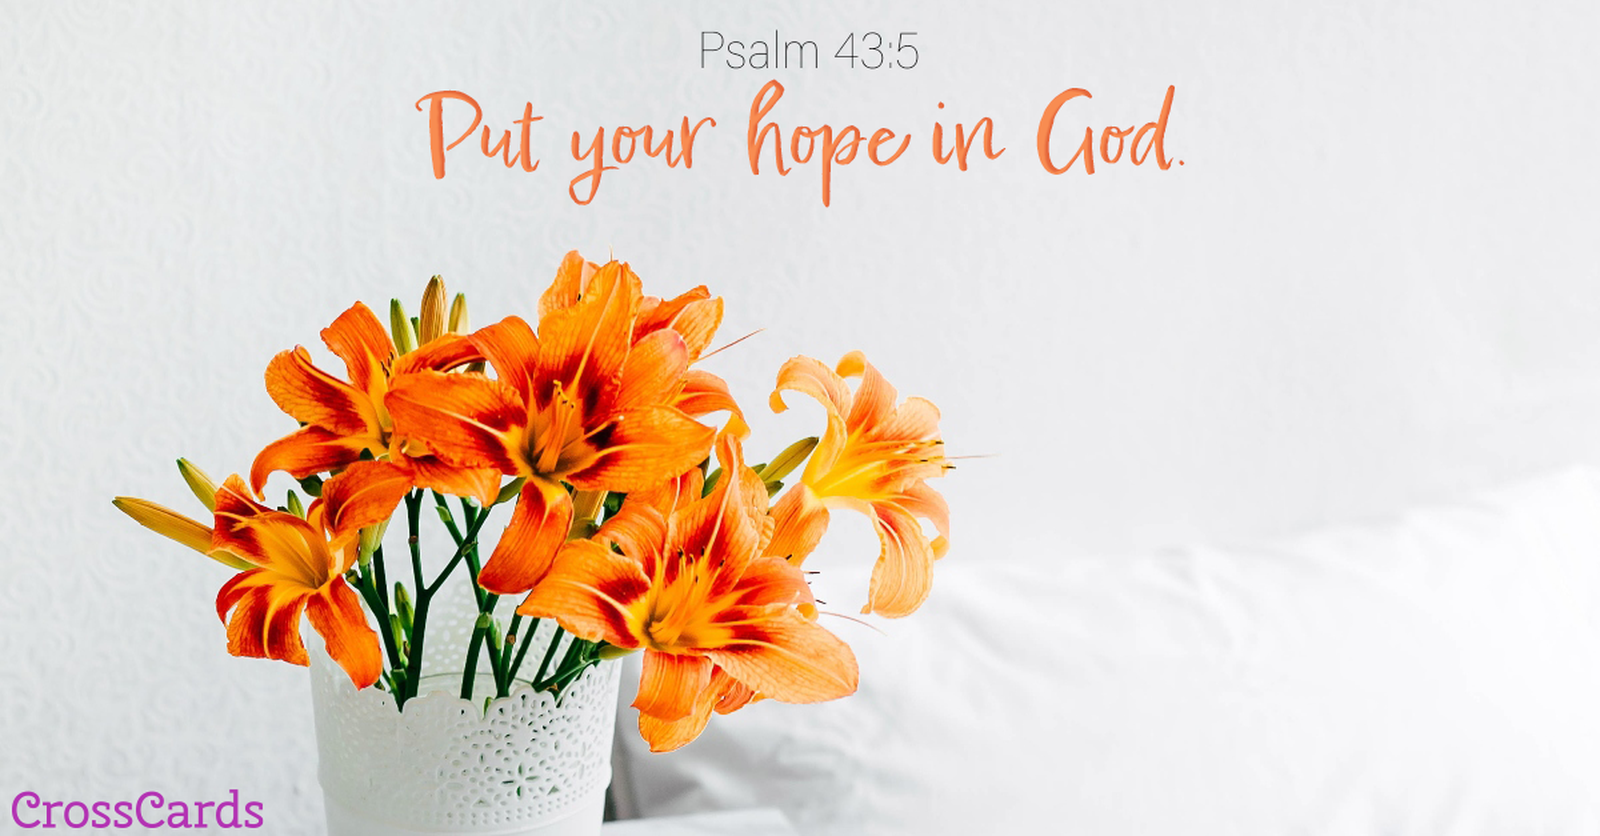 Psalm 43:5 - Hope in God